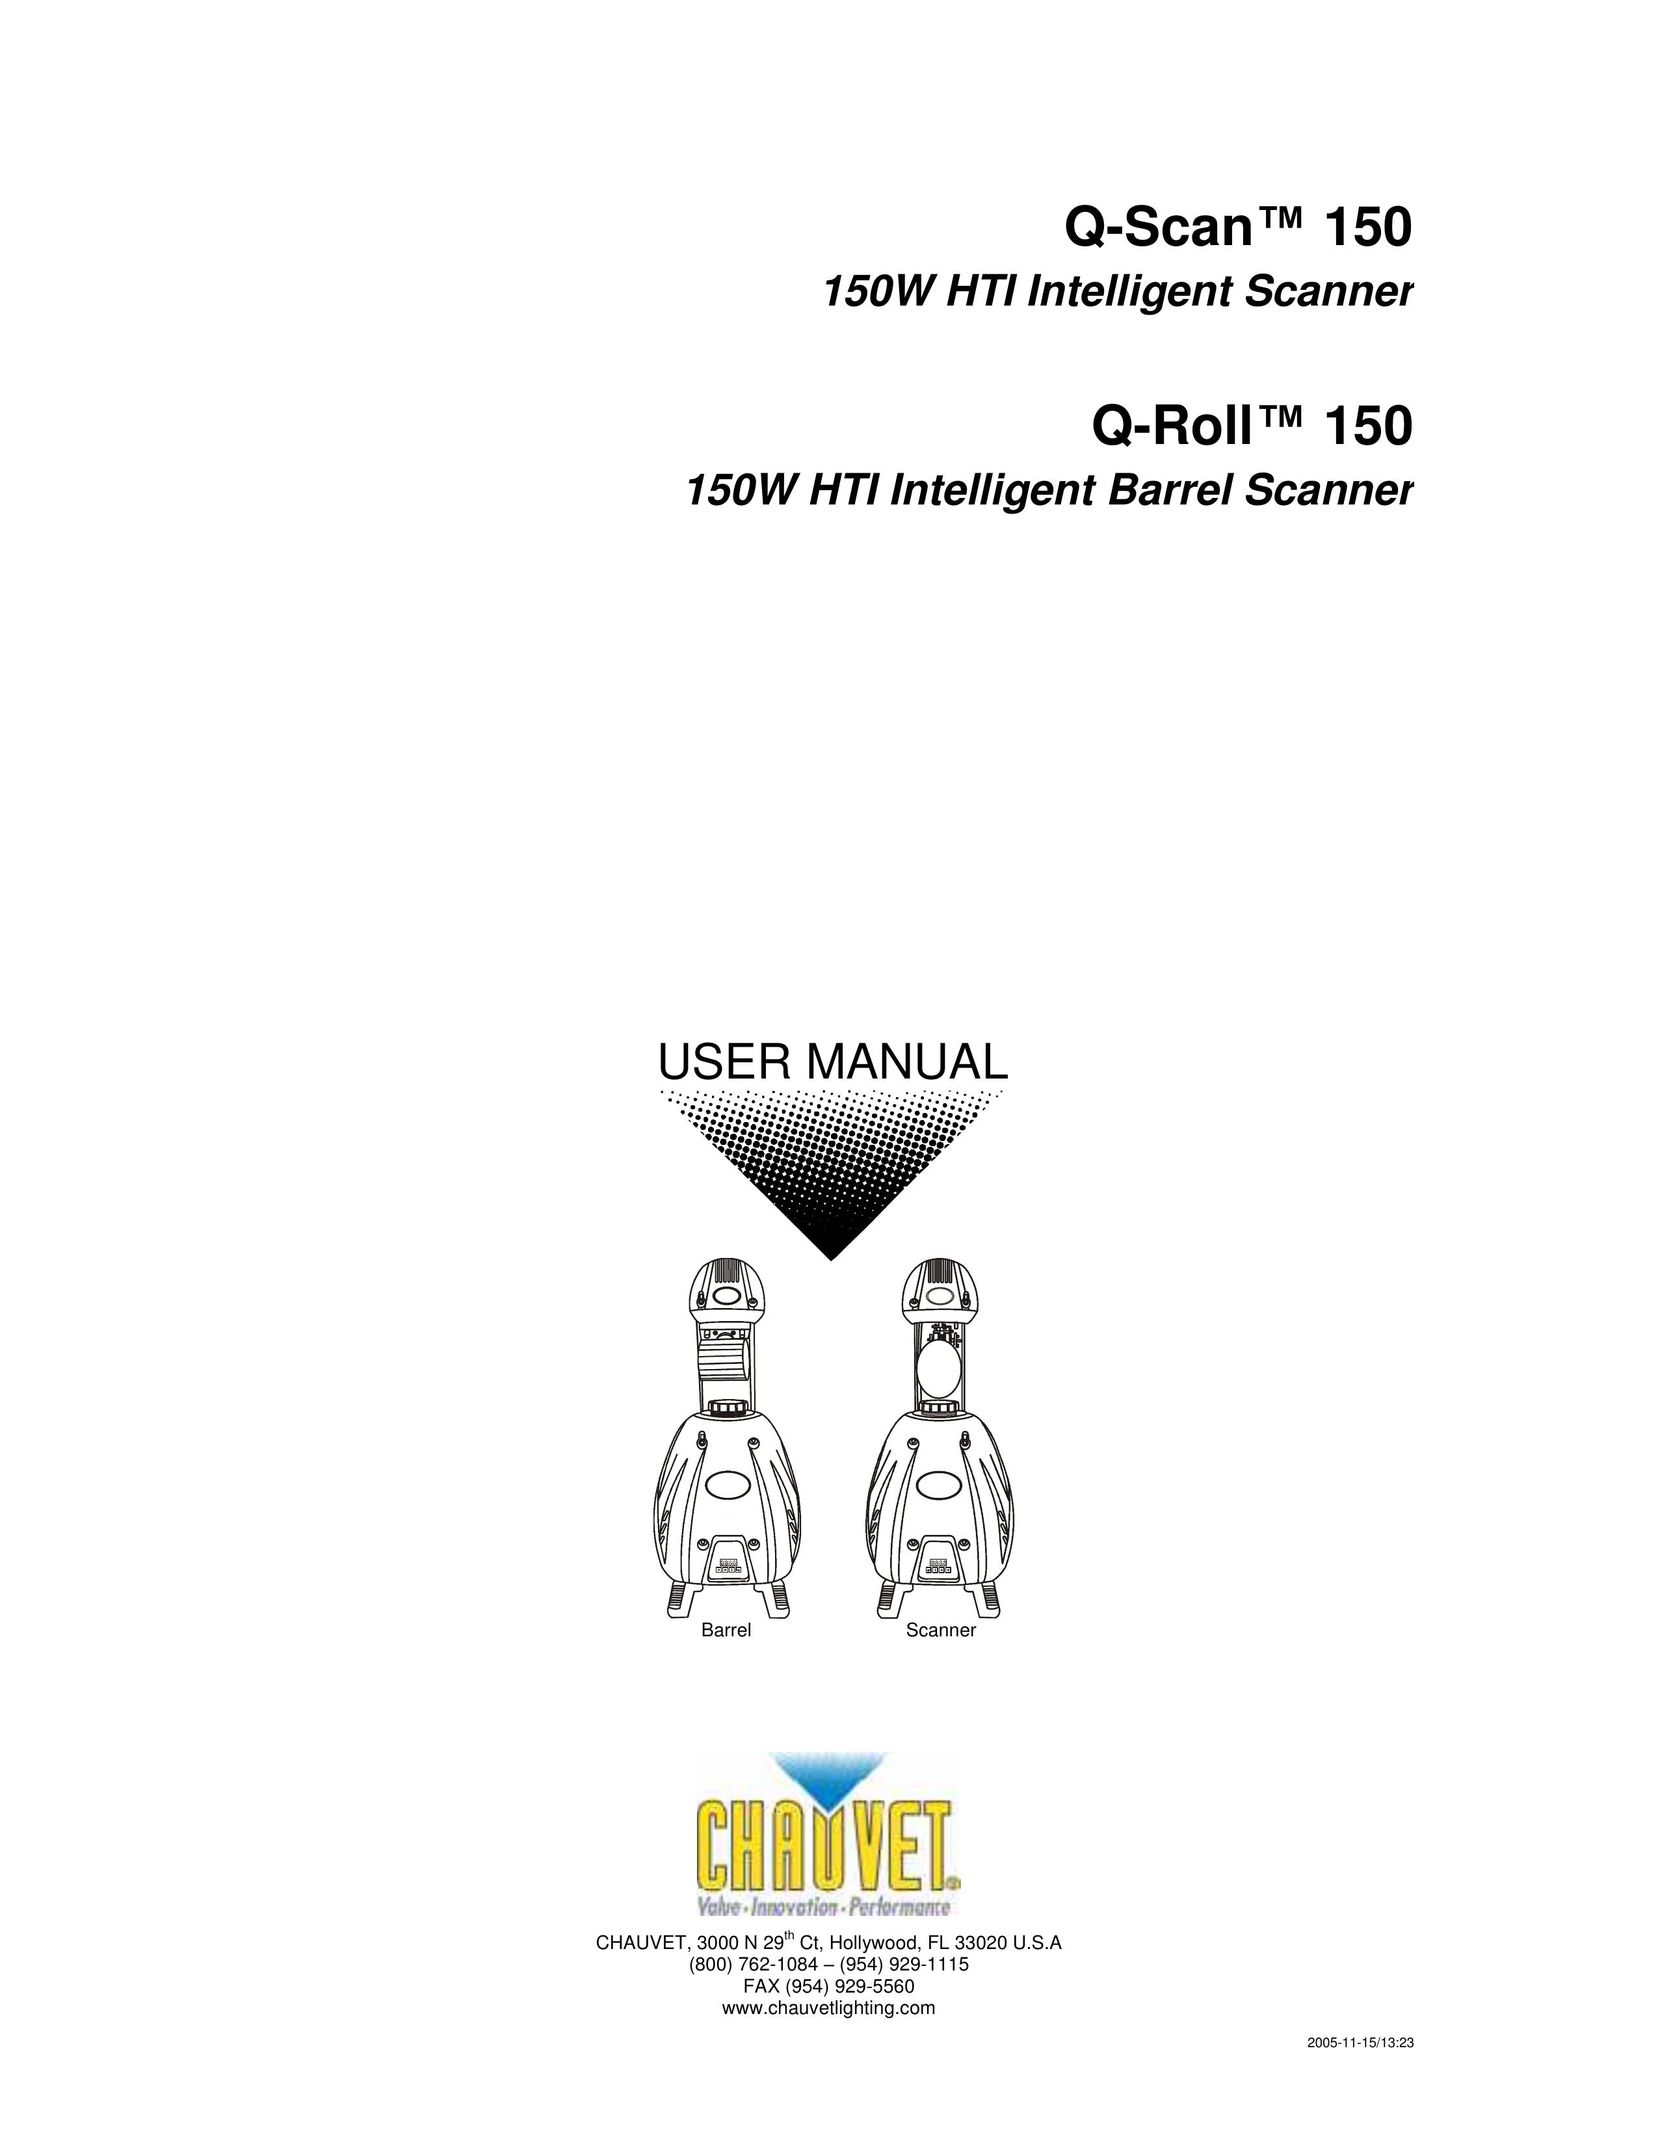 Chauvet Q-Roll 150 Scanner User Manual